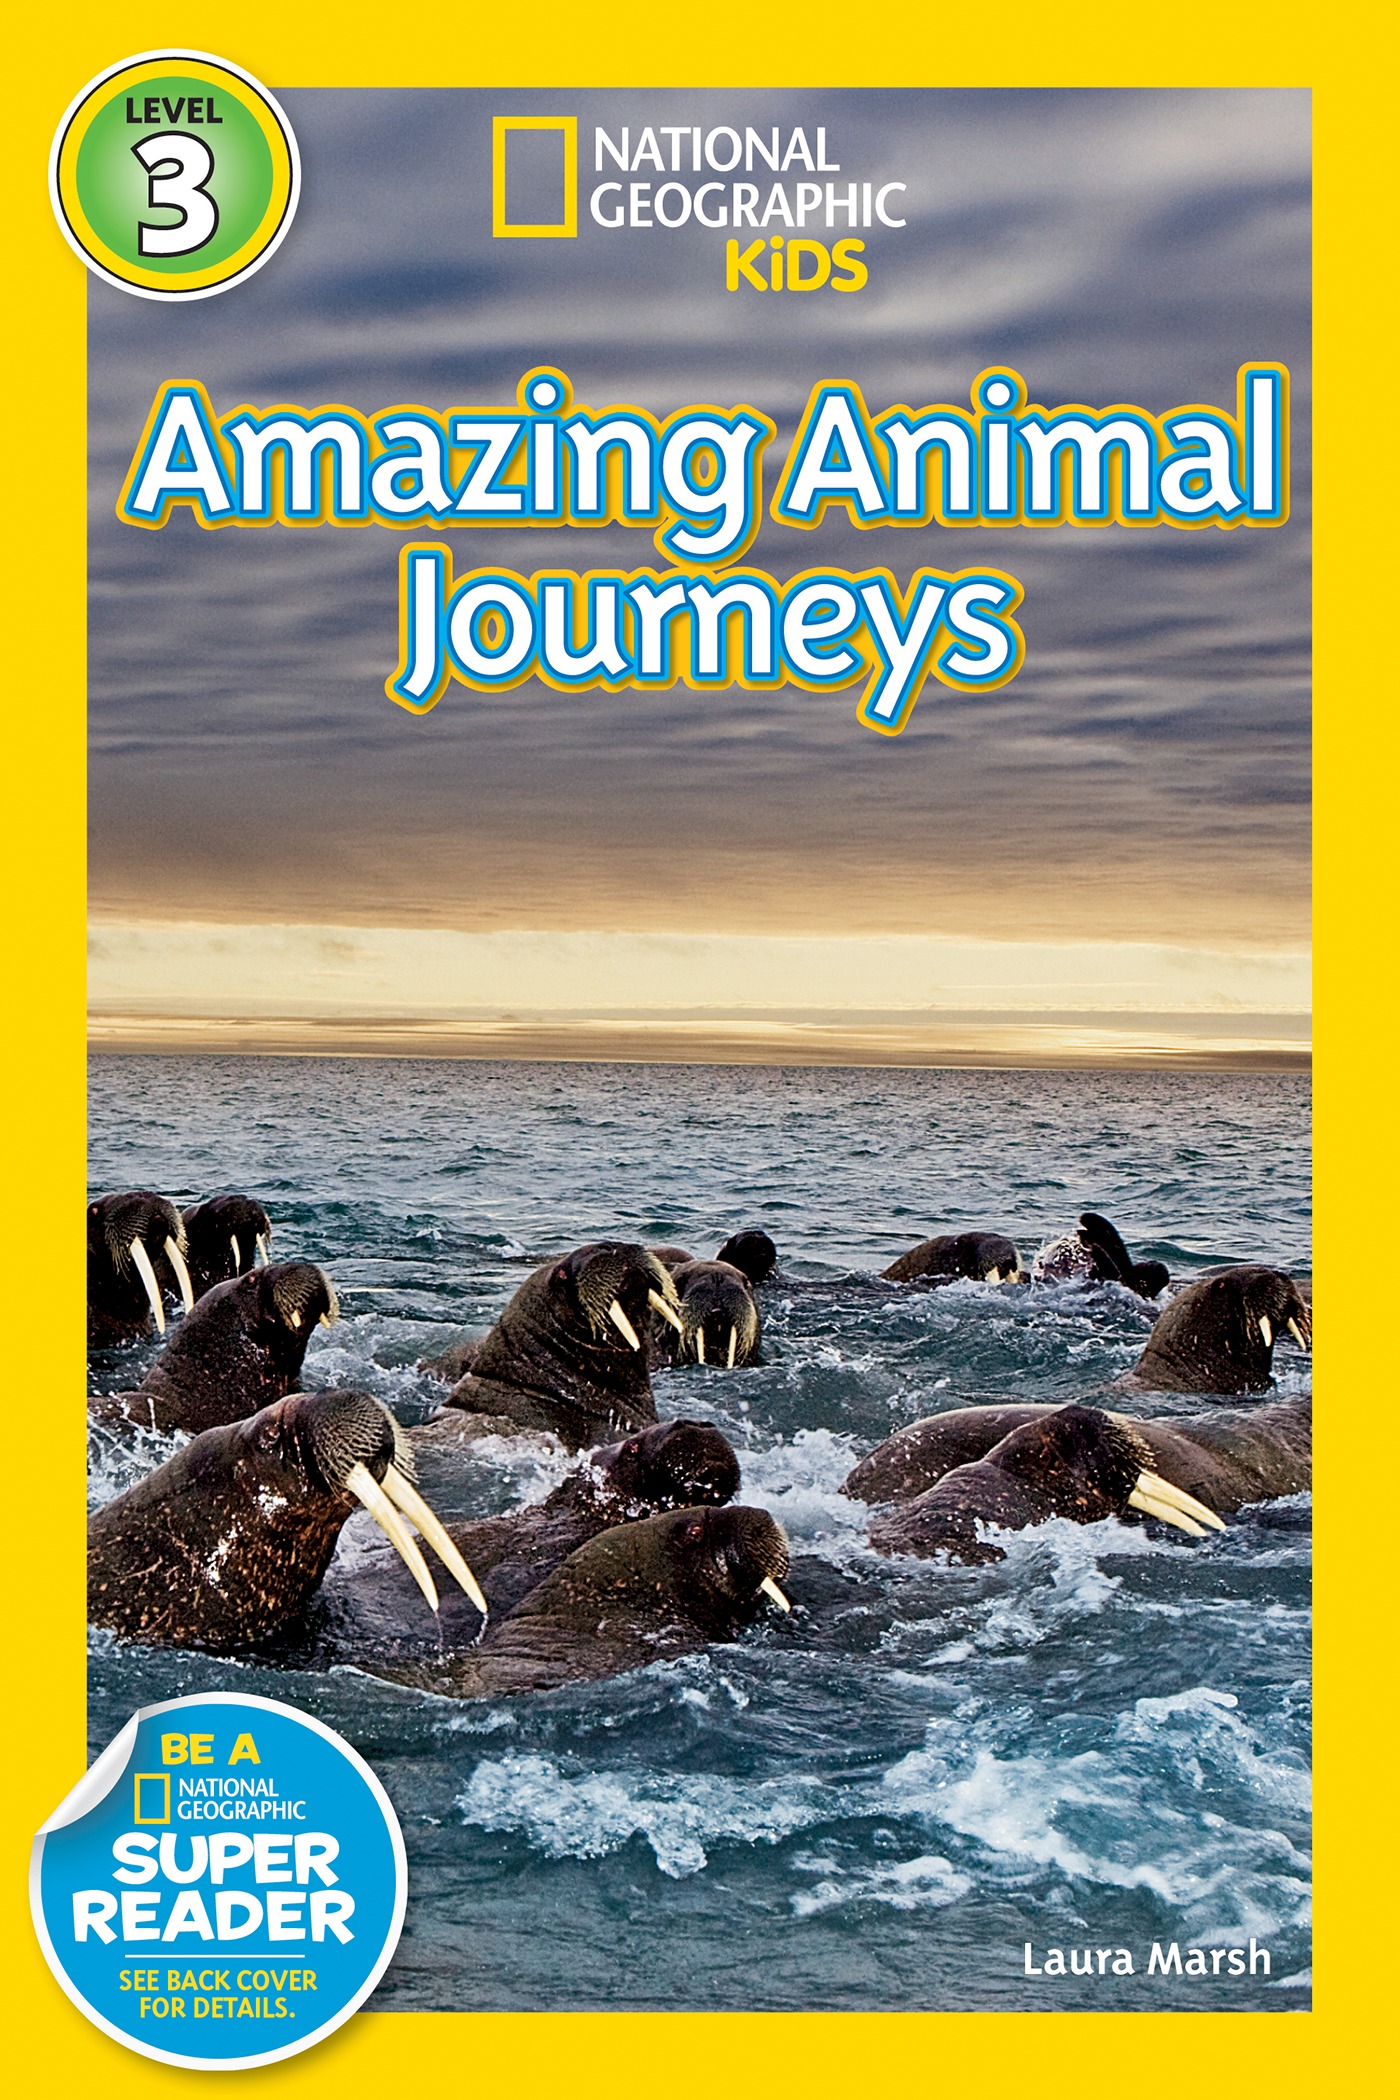 animal groups journeys